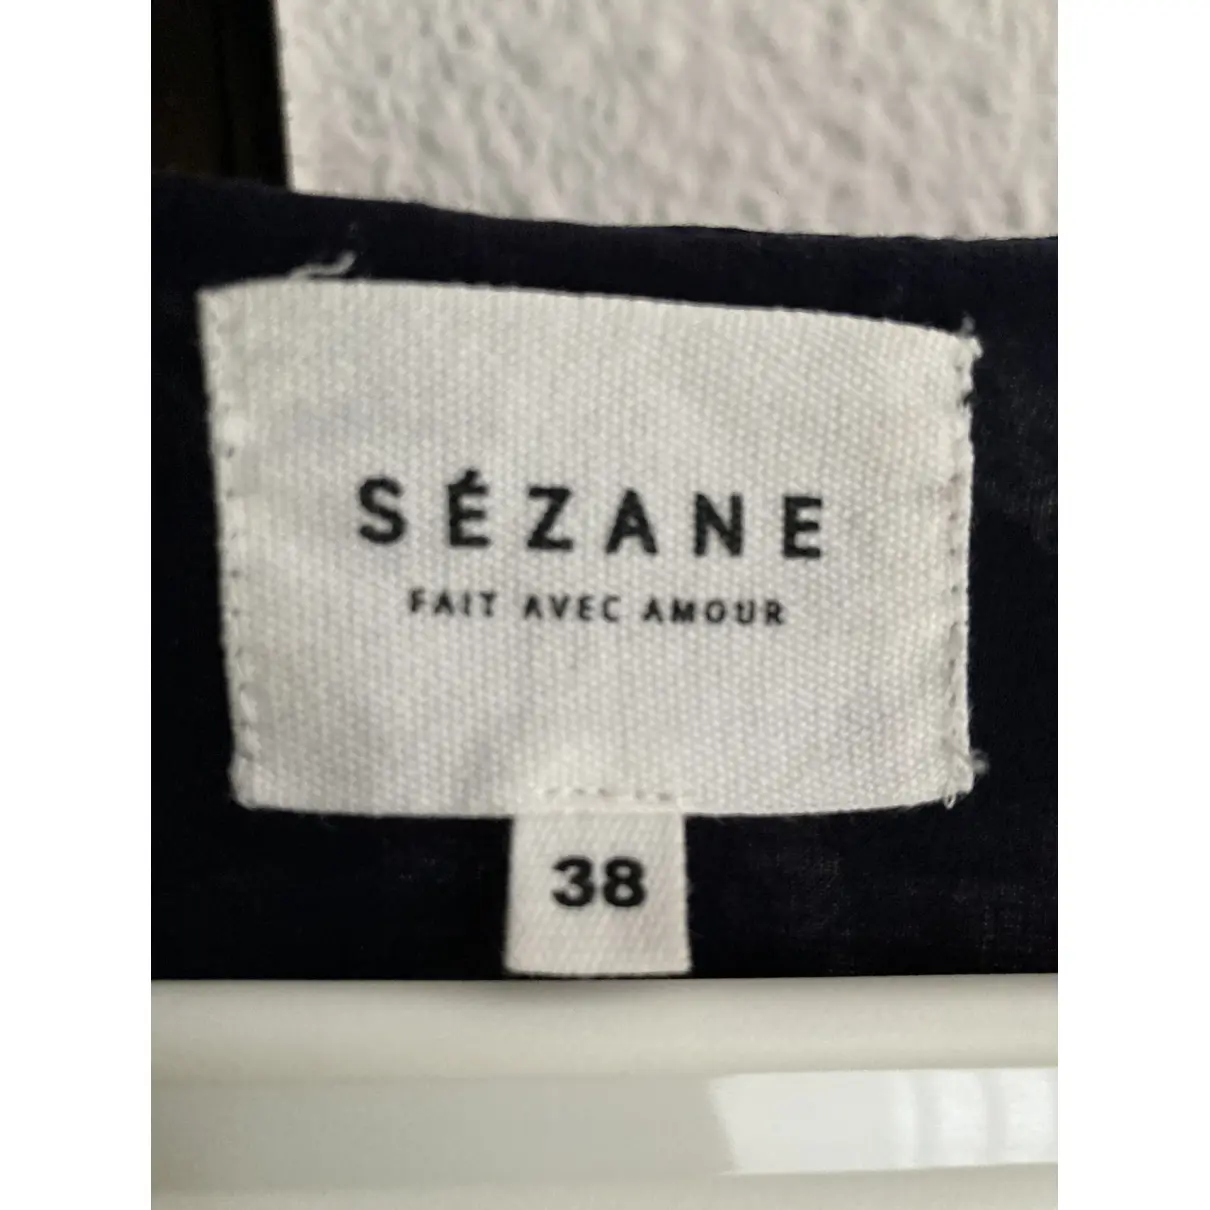 Buy Sézane Shirt online